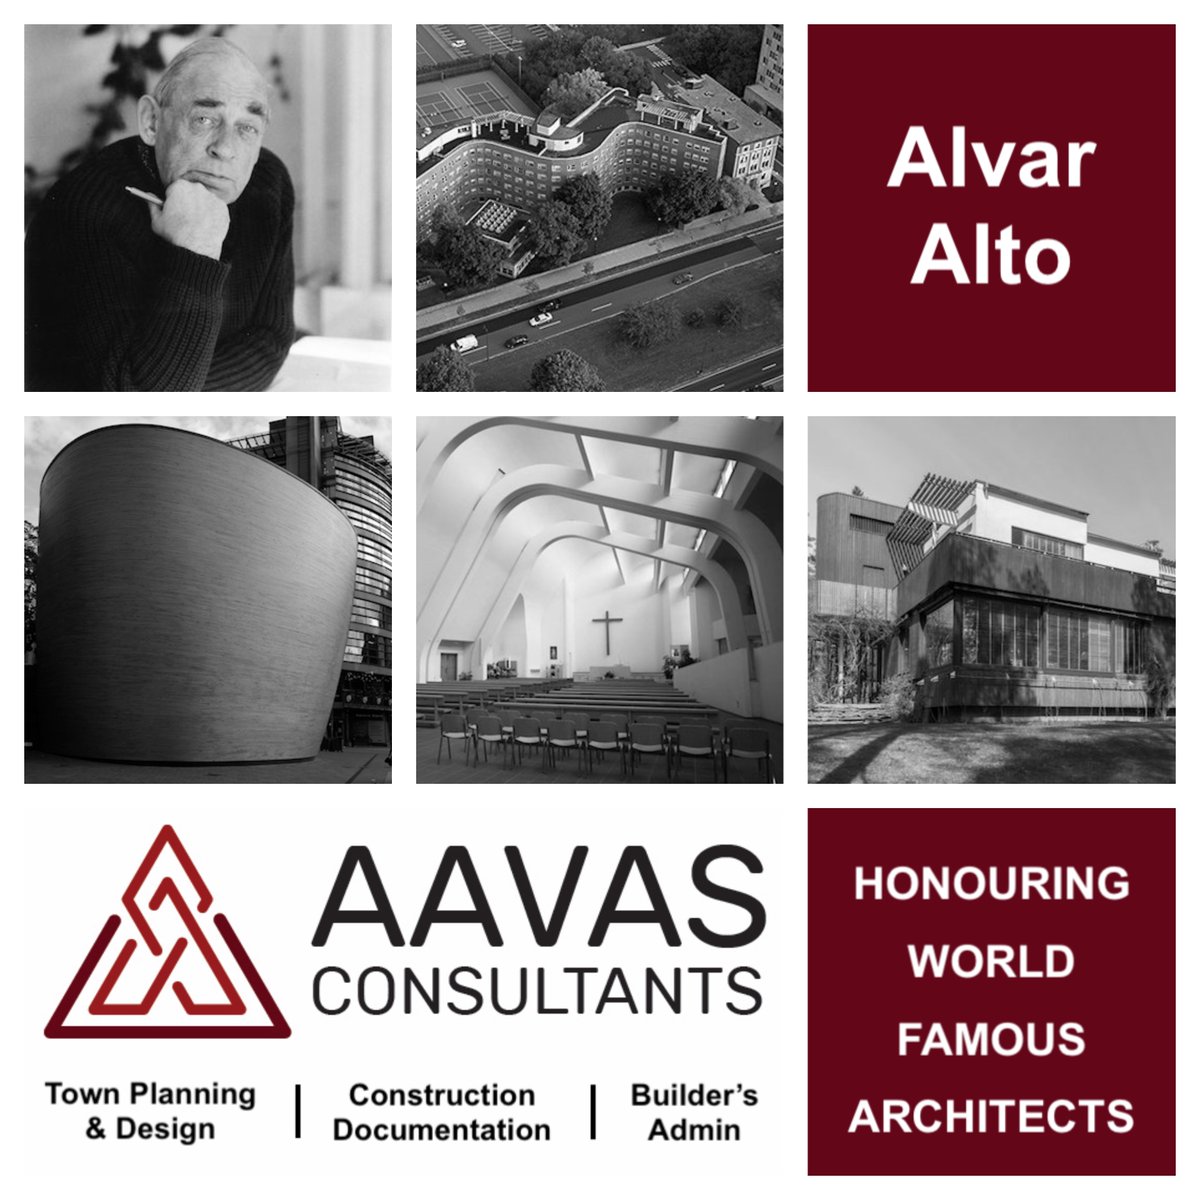 #AavasConsultants #AavasAus #Architects #architecturedesign #architecturaldesign #famousbuilding #FamousArchitects #ArchiDaily #ArchiDesign #ArchitectureLovers #TopArchitects #WorldArchitects #HonouringWorldFamousArchitects #AlvarAlto #AlvarAltoDesigns #AlvarAltoArchitects